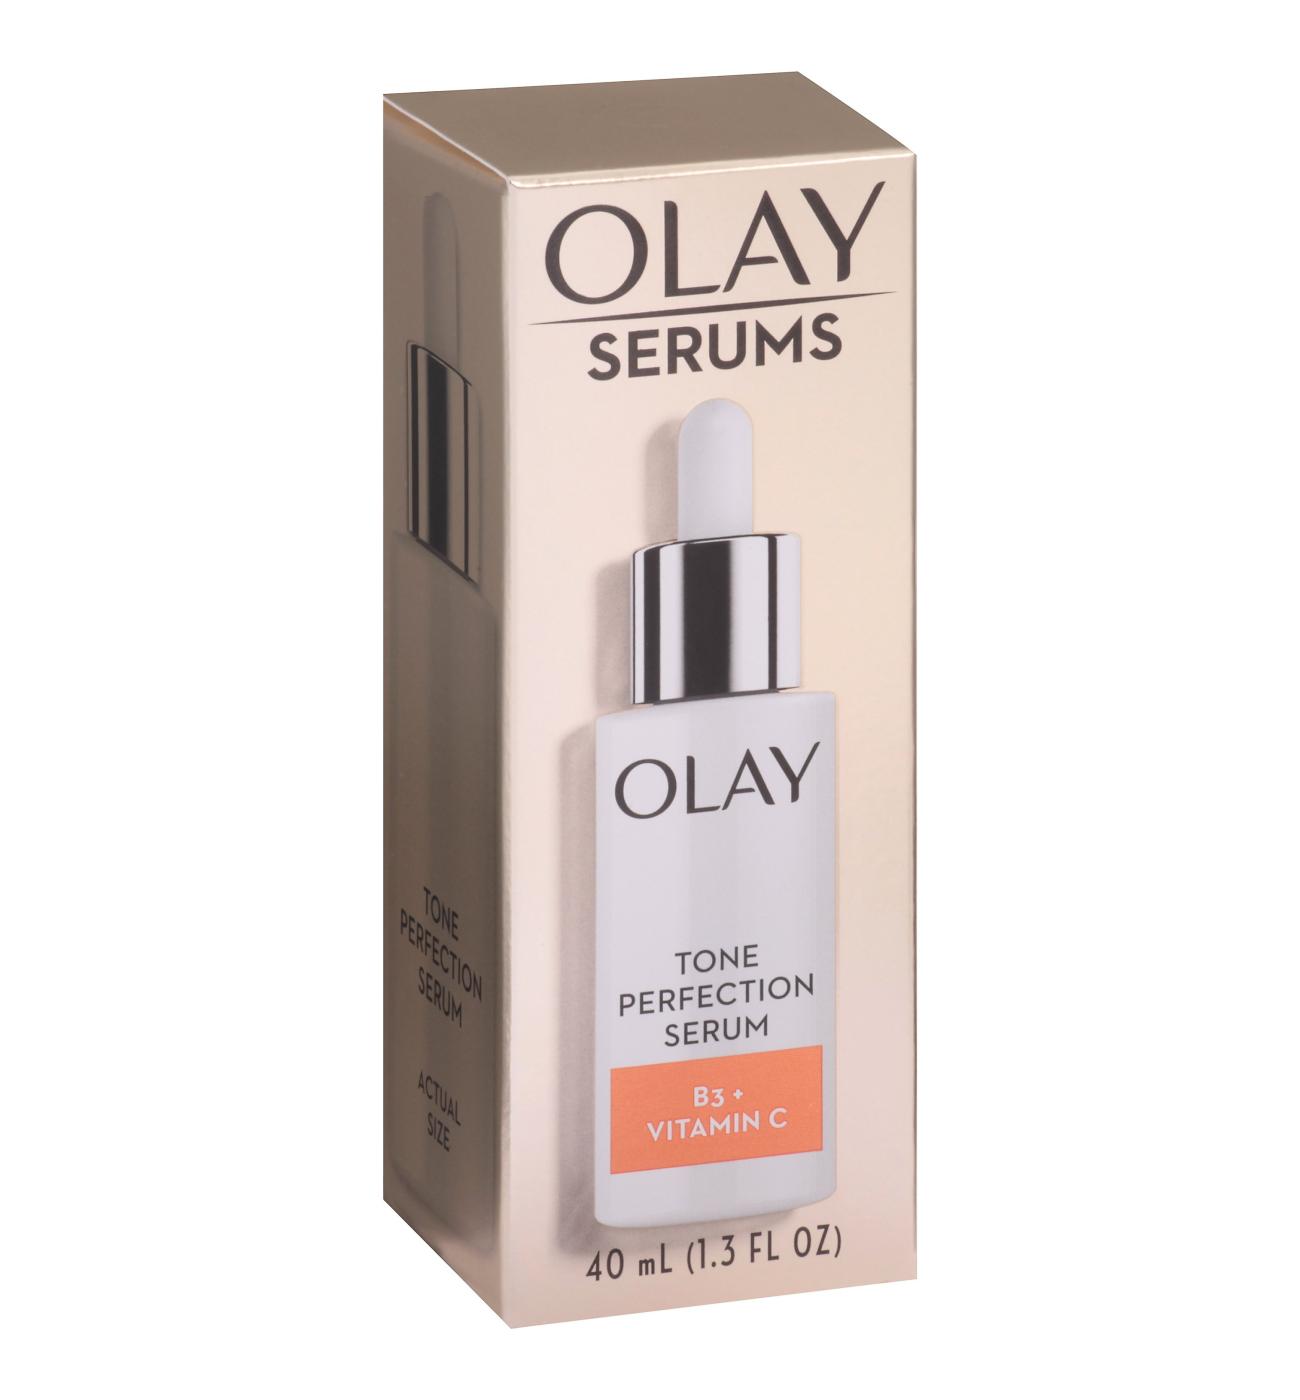 Olay Olay Tone Perfection Serum with Vitamin B3+ Vitamin C; image 1 of 2